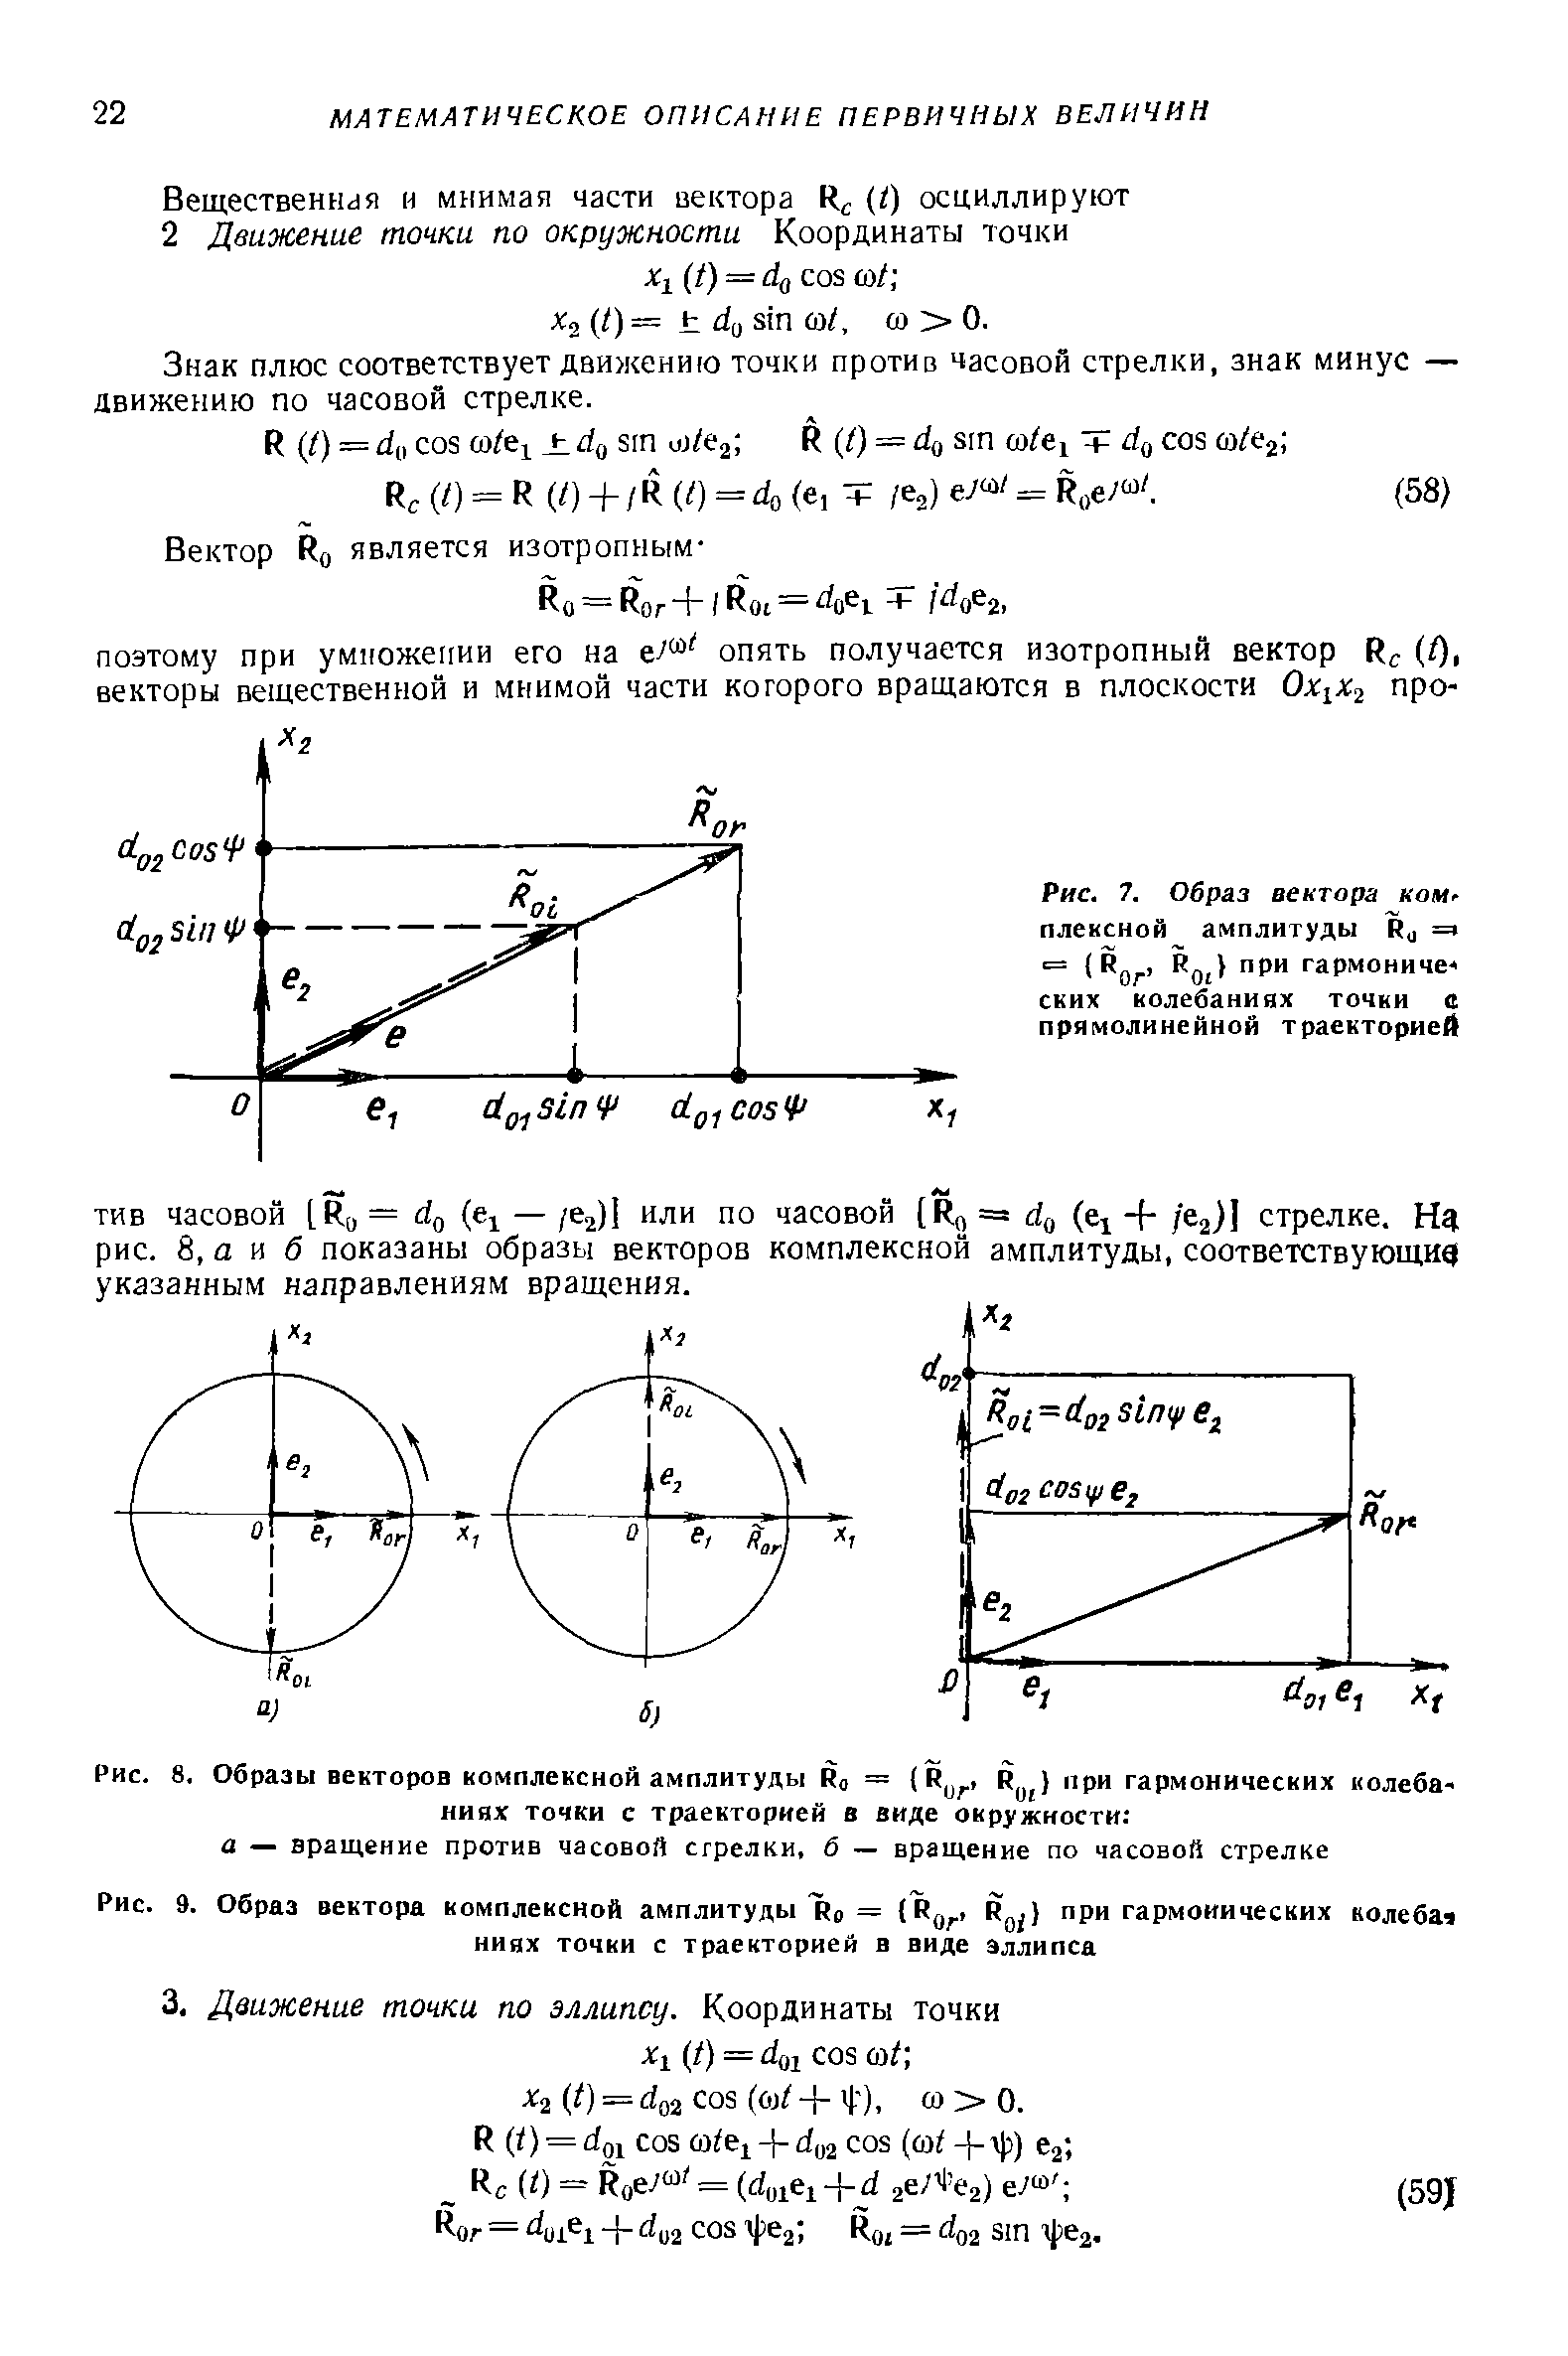 Рис. 9. Образ <a href="/info/175977">вектора комплексной амплитуды</a> "Ro = (Rj, , R ) при гармонических колебав ниях точки с траекторией в виде аллипса
